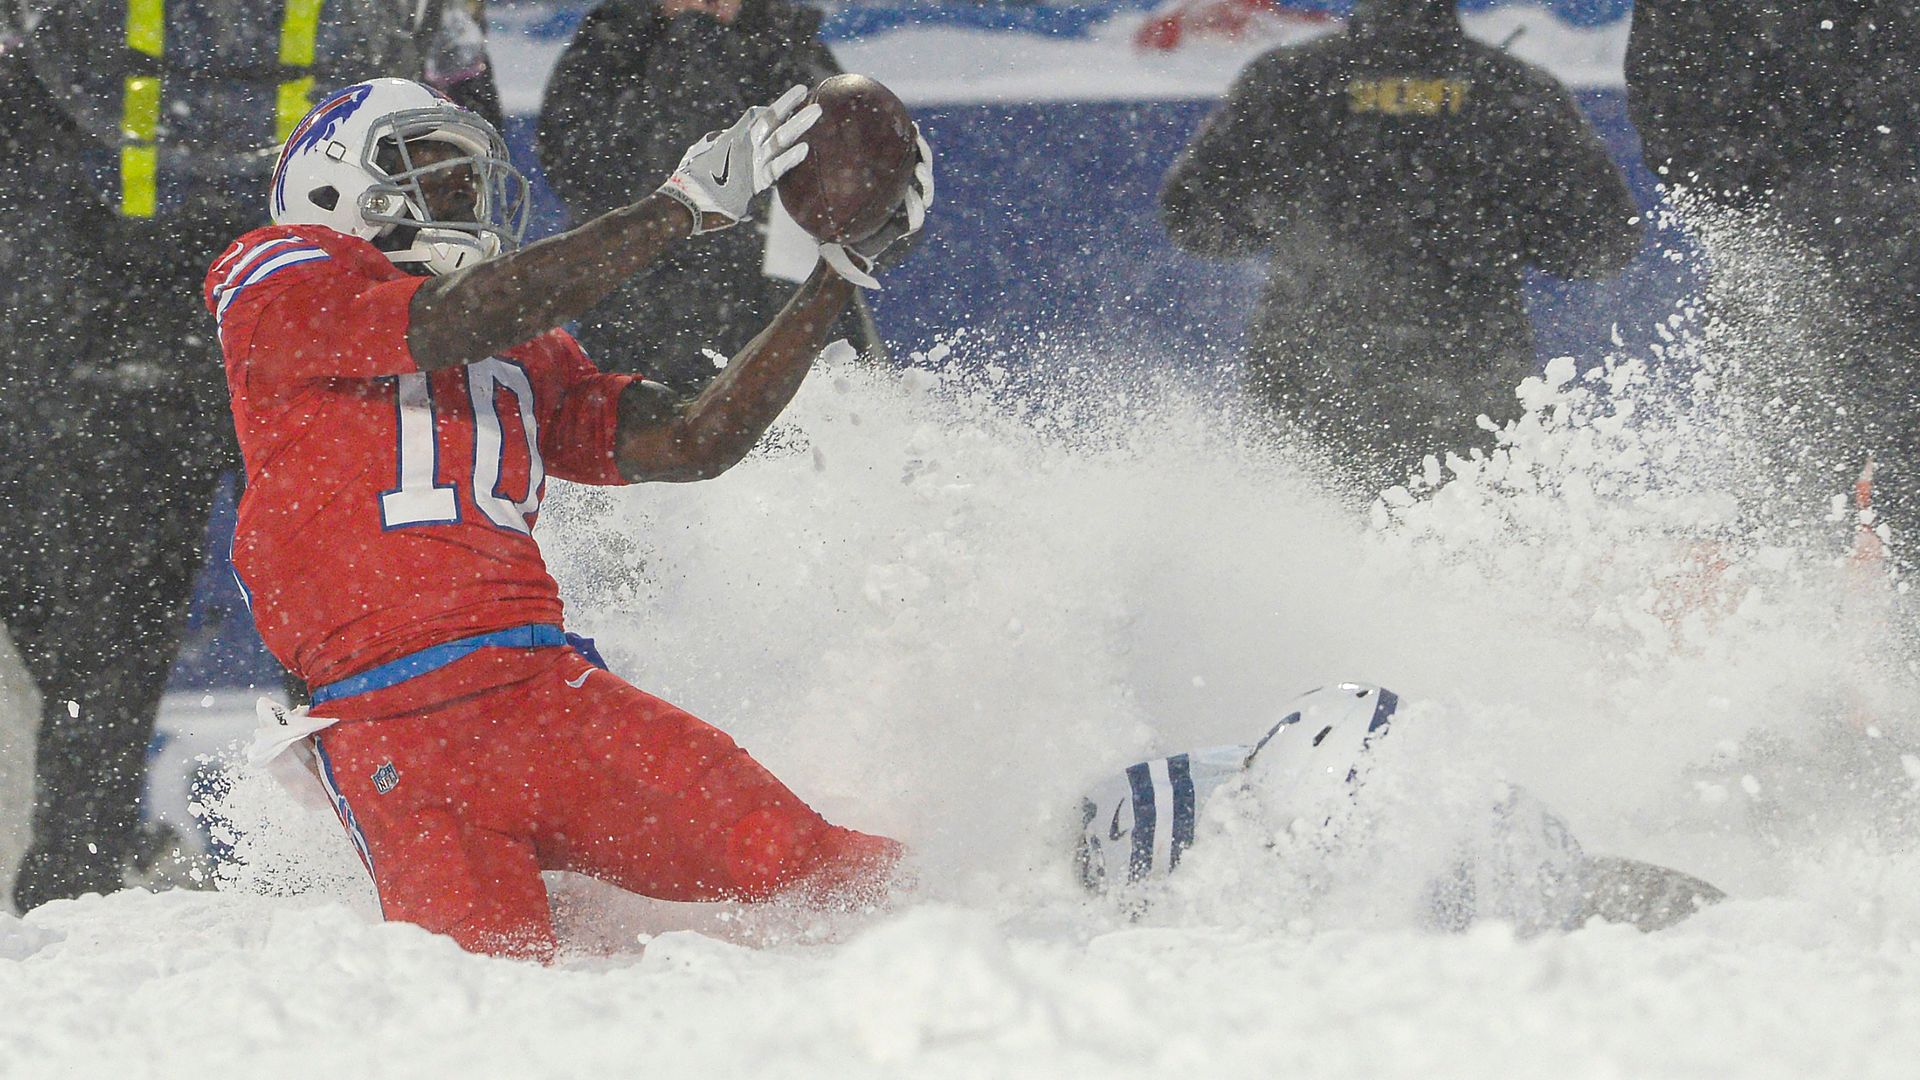 Buffalo braced for historic snowfall | Bills-Browns expected to go ahead